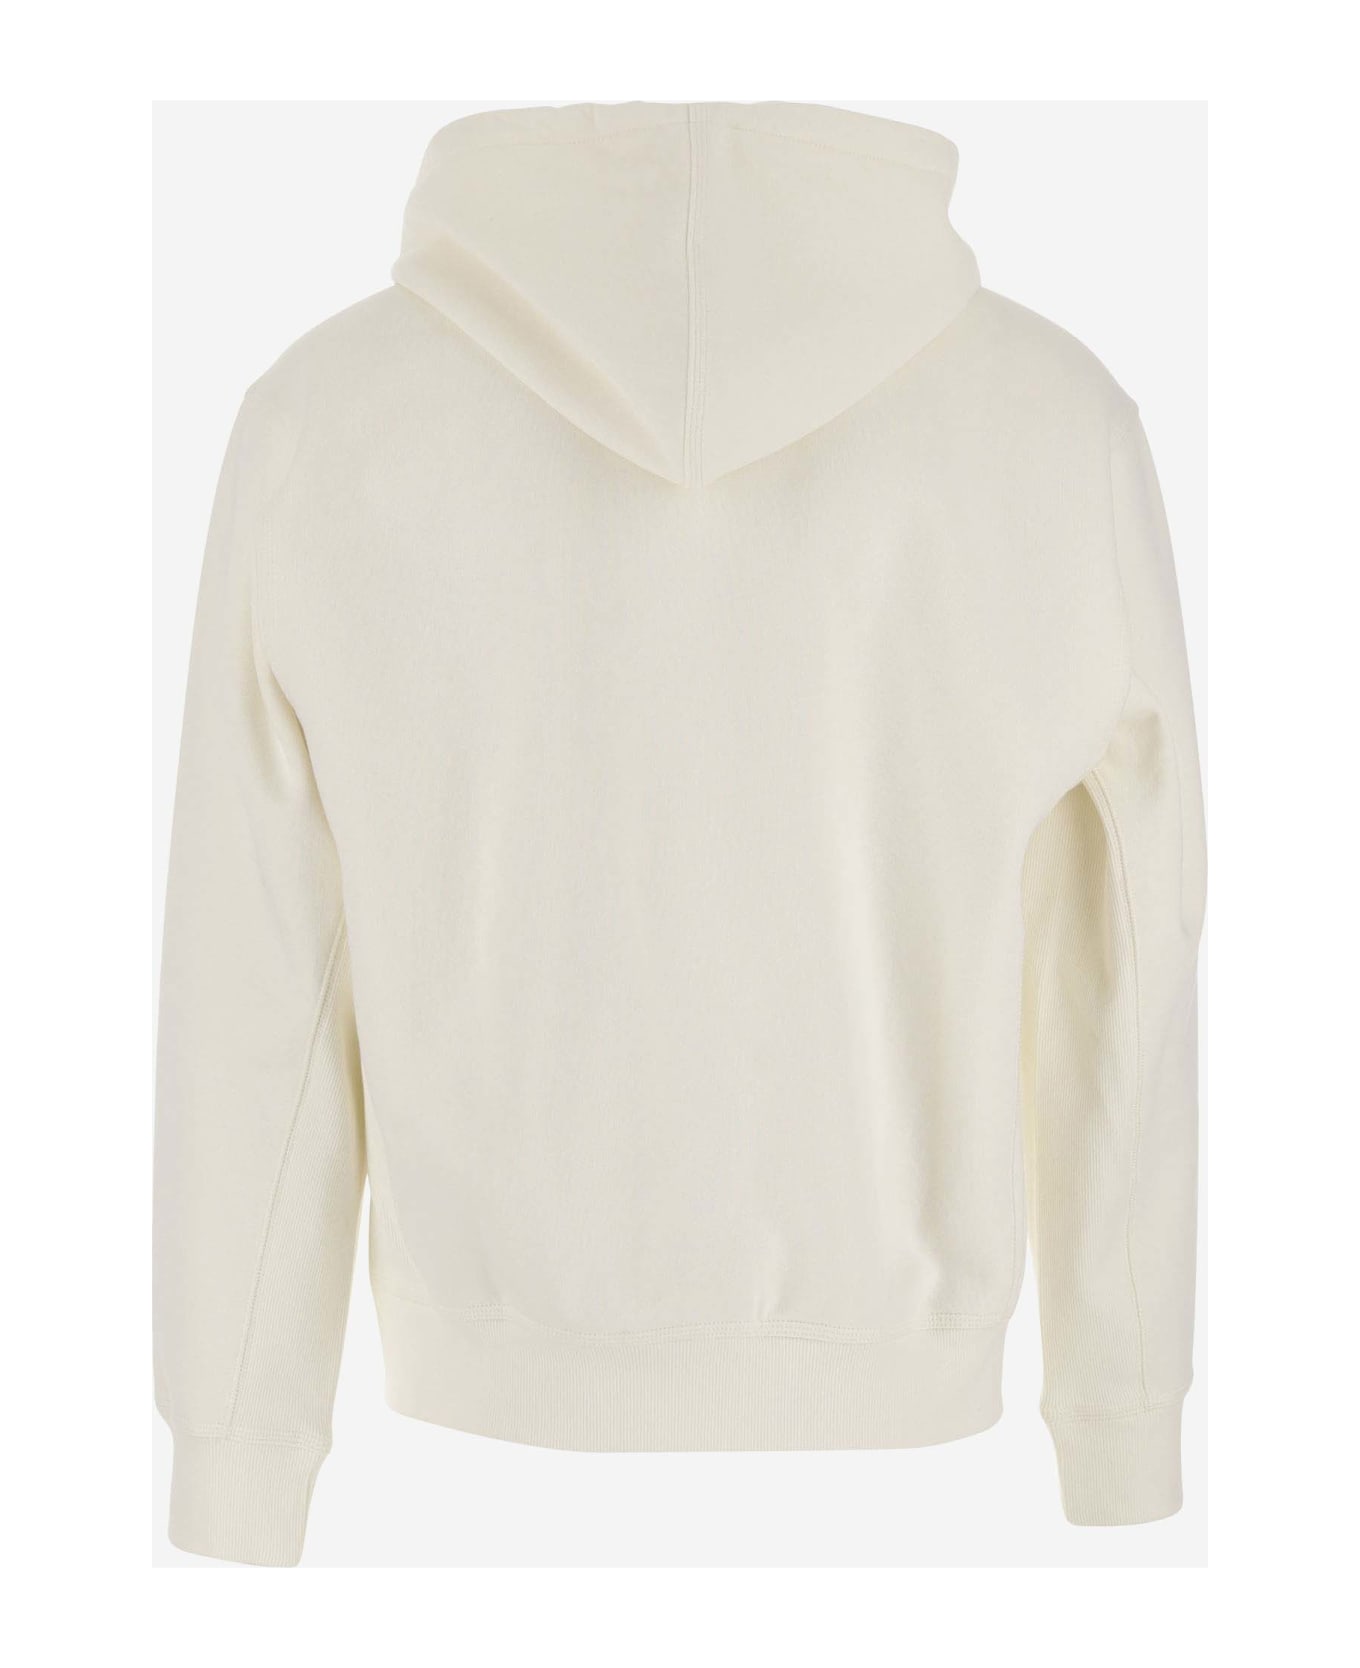 Carhartt Cotton Blend Sweatshirt With Logo - Ivory